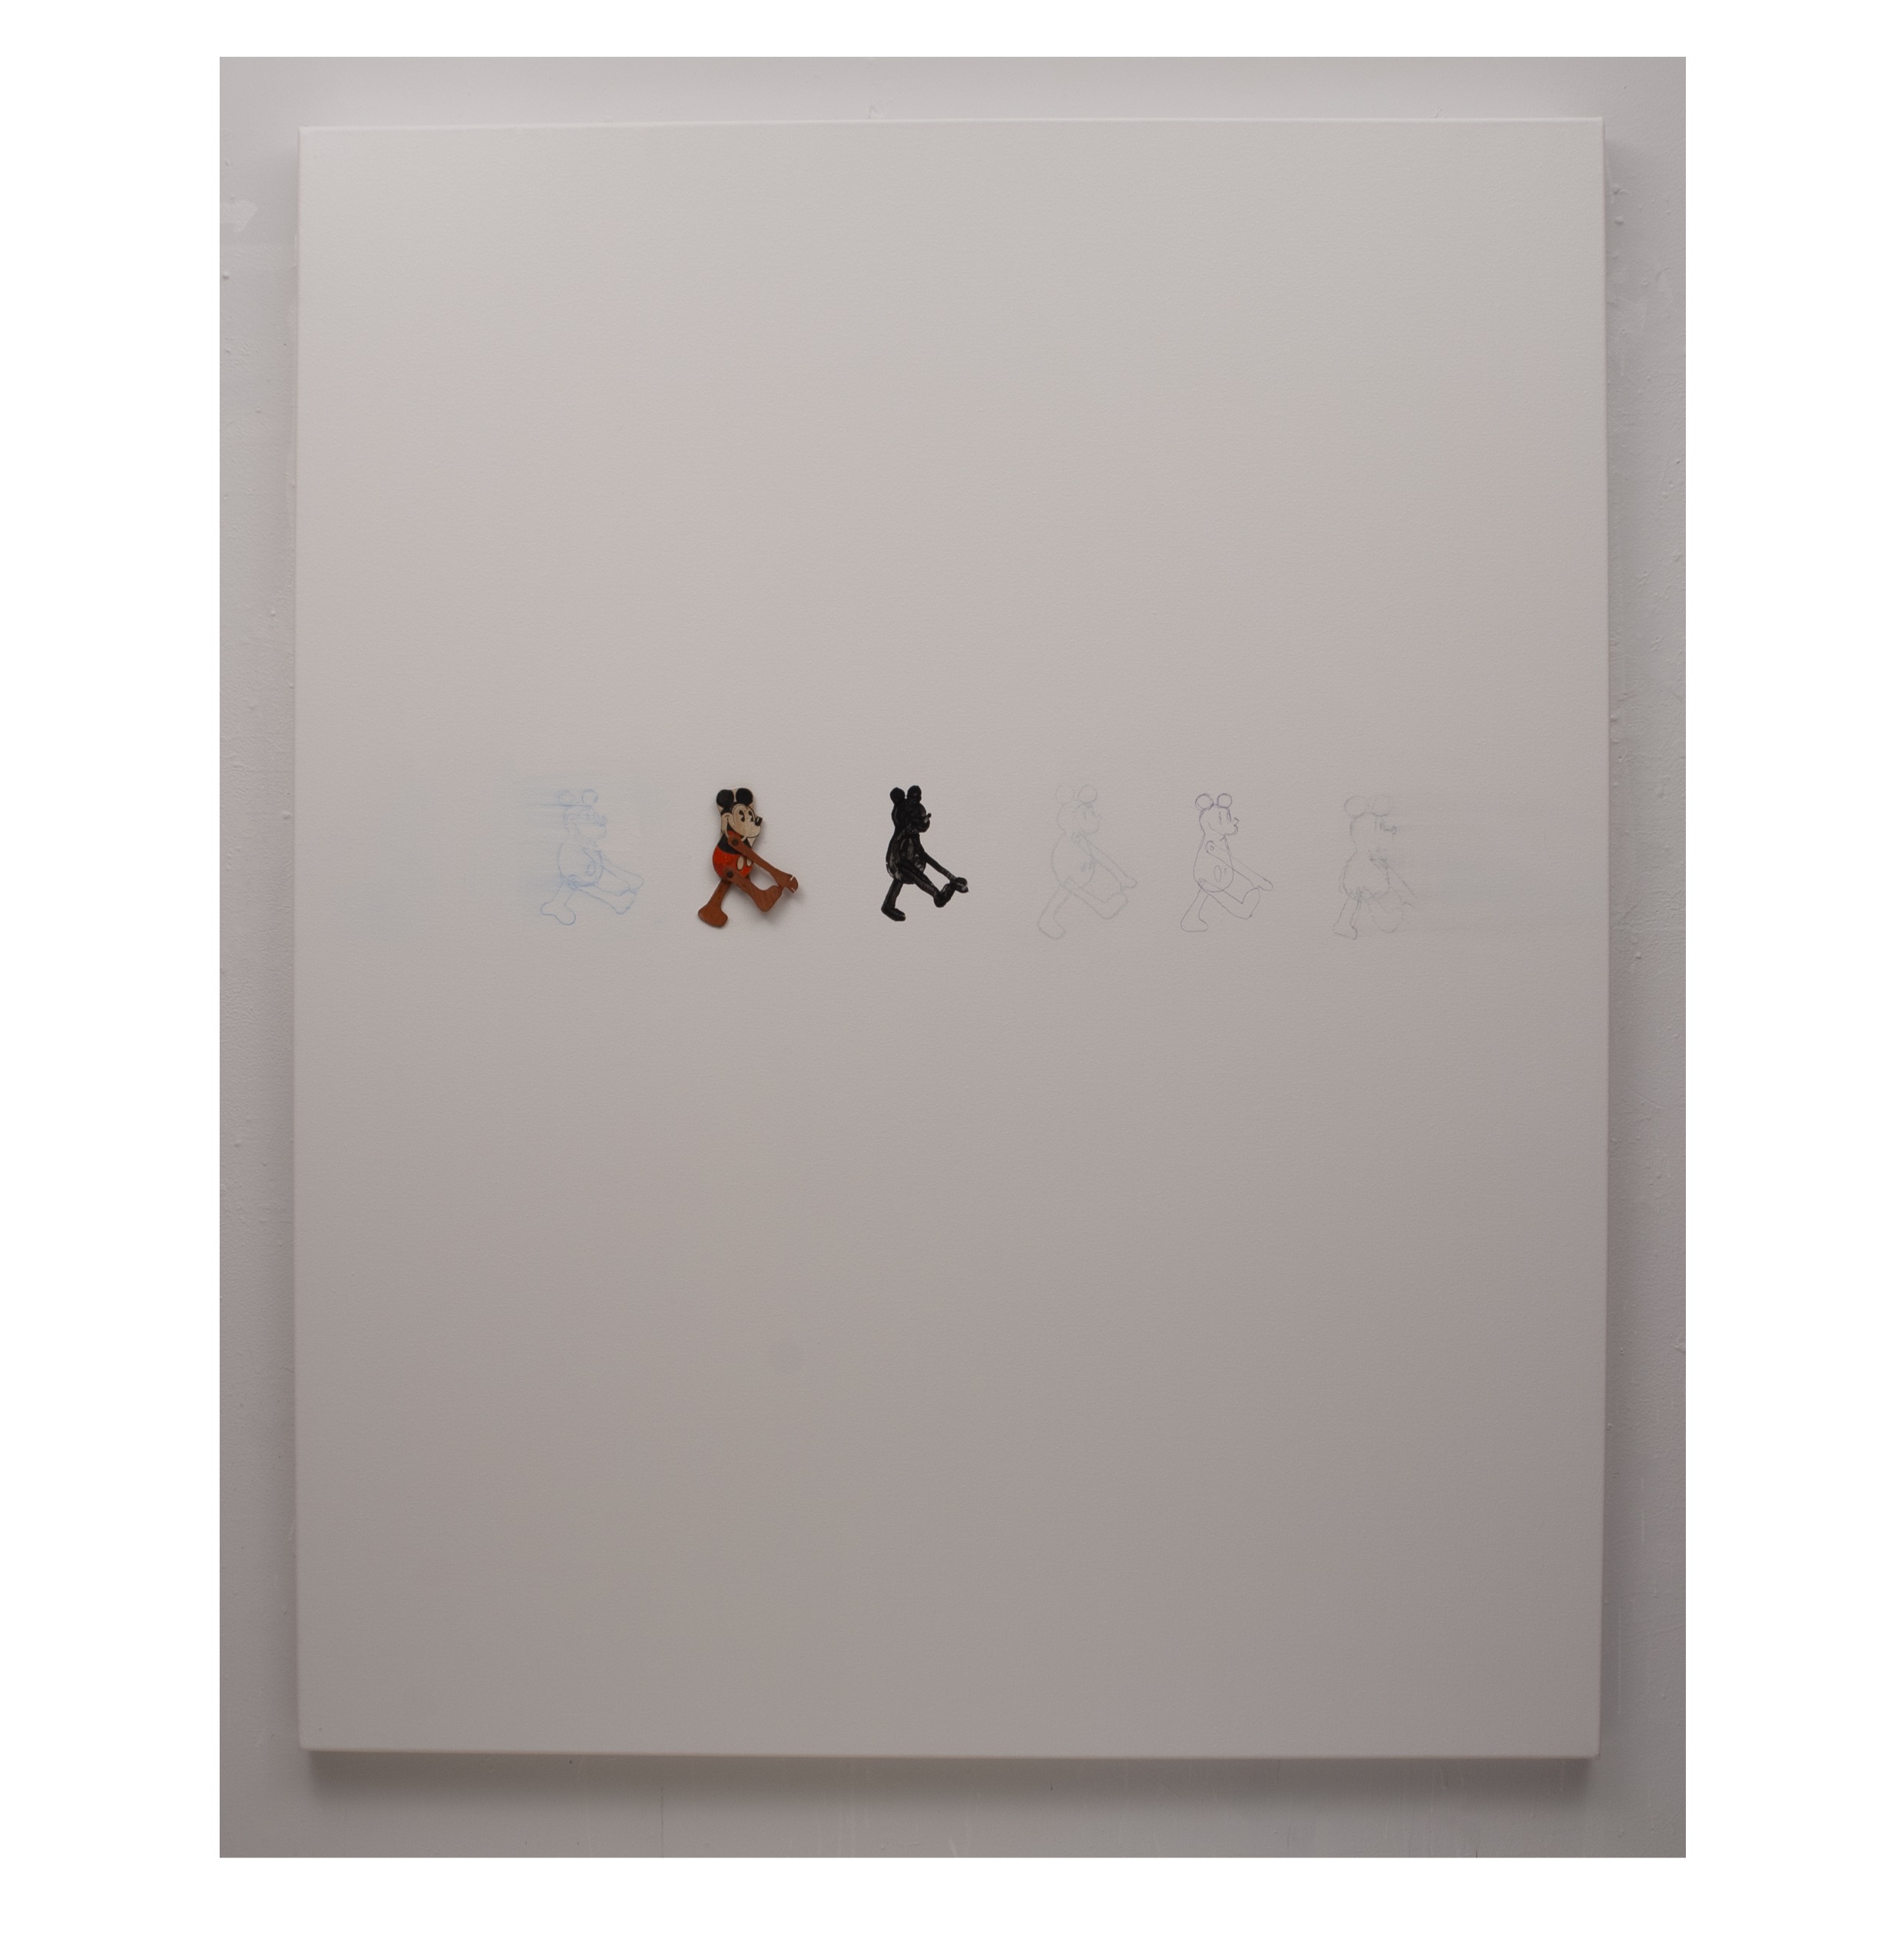 Liliana Porter - To Go There : Red Mickey. 2020. Acrílico, grafito y ensamblaje sobre lienzo. 152,4 x 121,92 cm